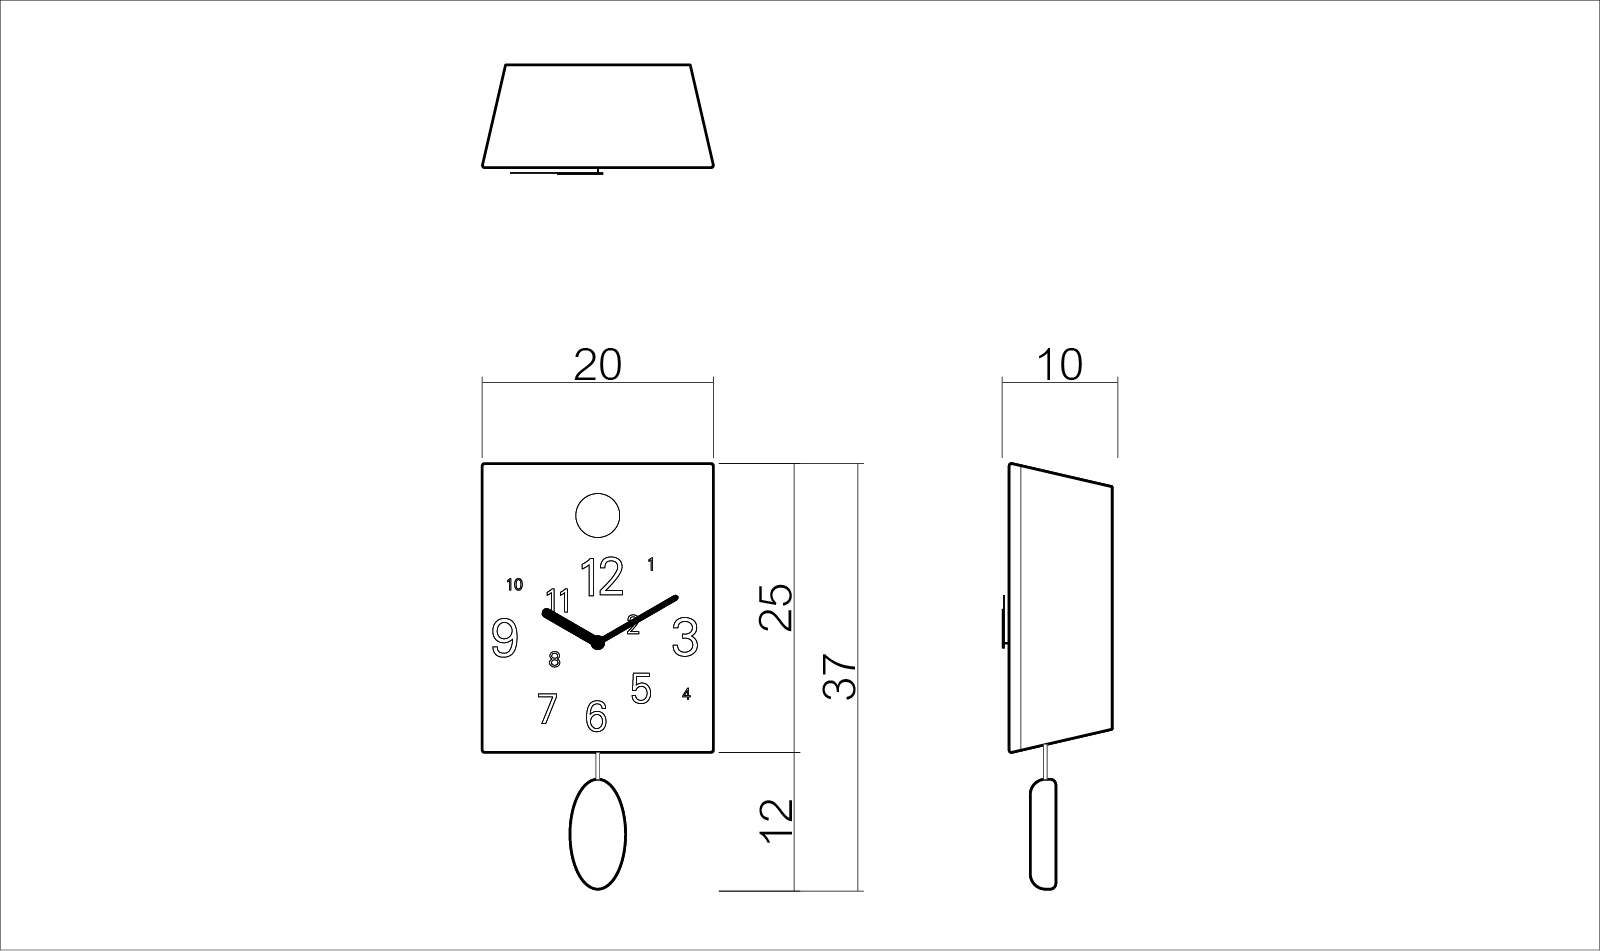 Three-sided view/cuckoo clock